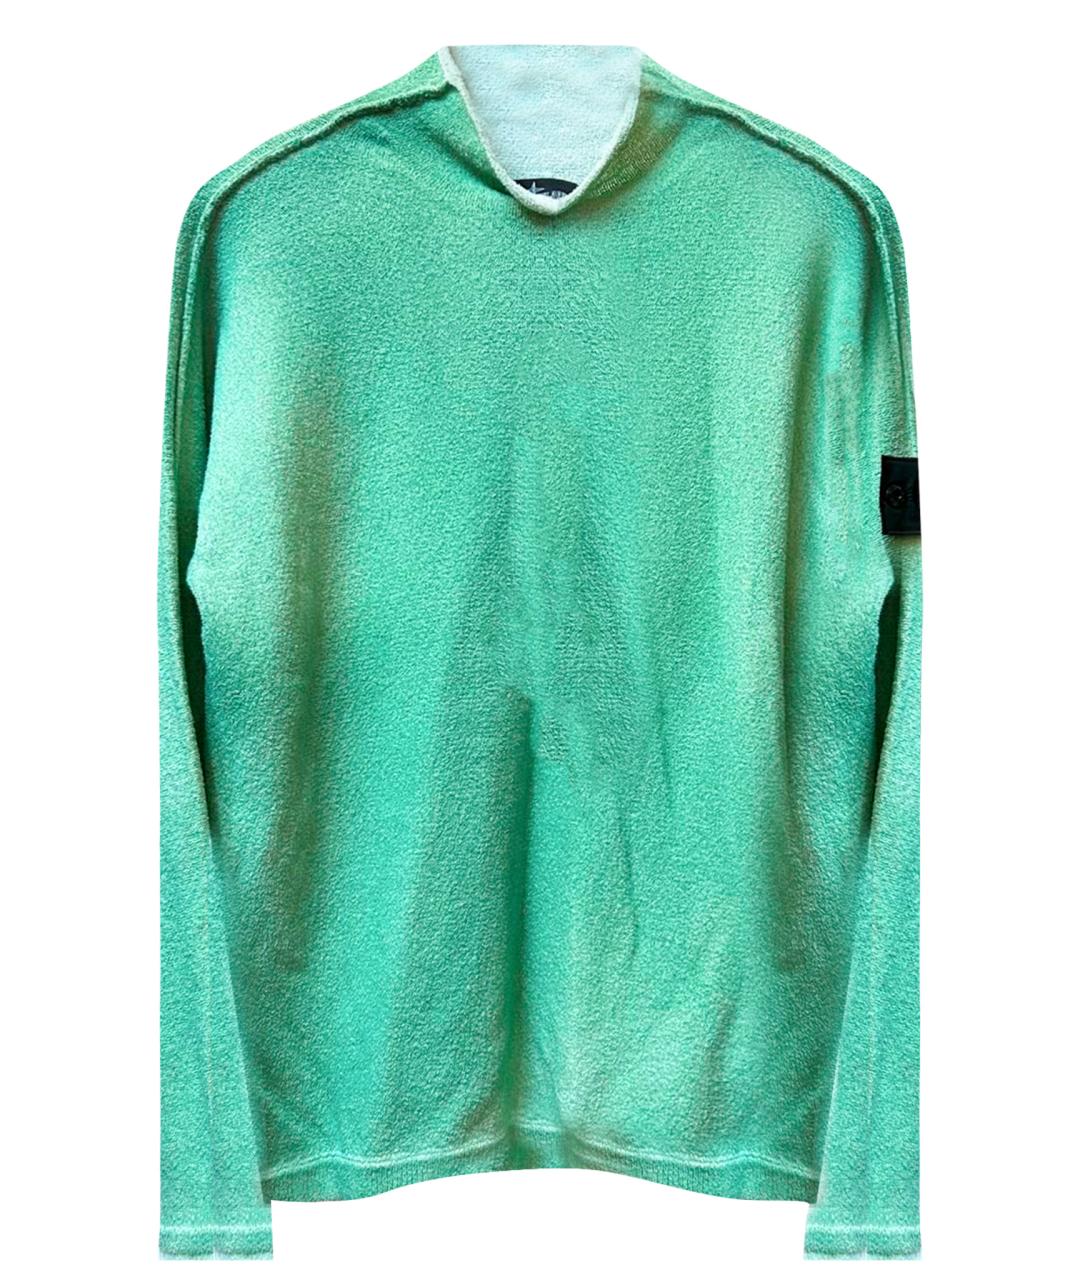 STONE ISLAND SHADOW PROJECT Зеленый хлопковый джемпер / свитер, фото 1